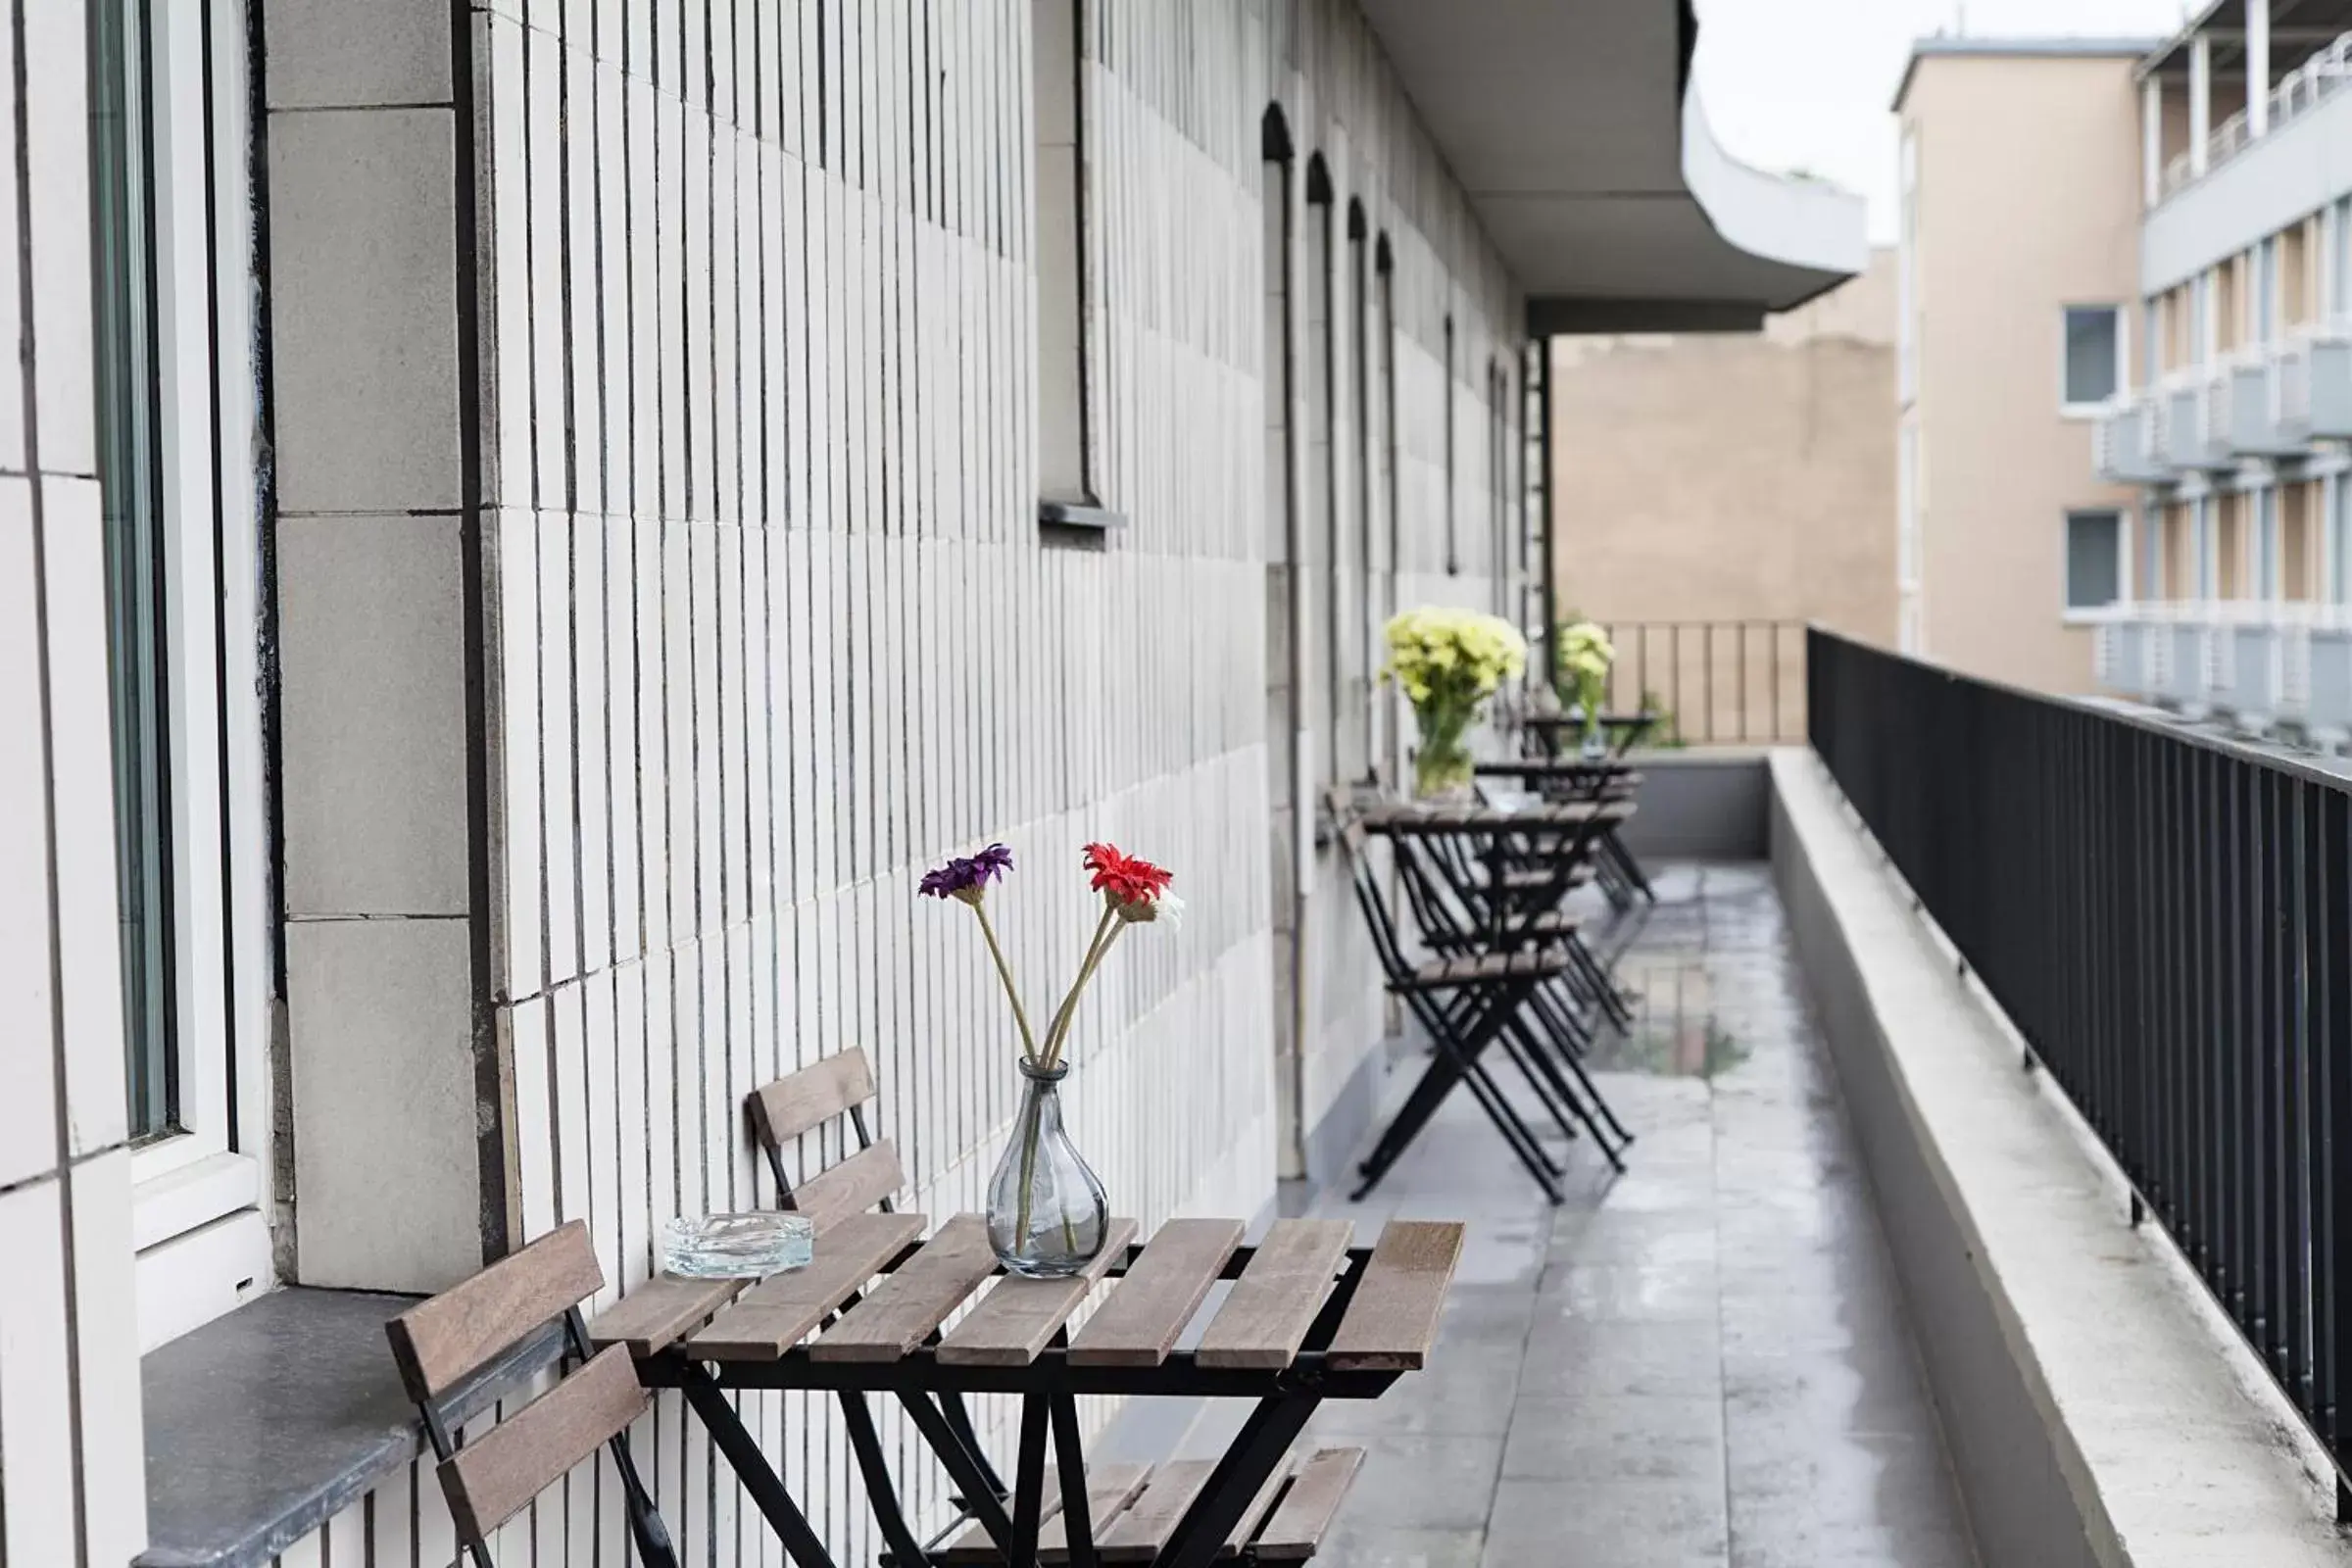 Balcony/Terrace, Patio/Outdoor Area in Quentin Boutique Hotel